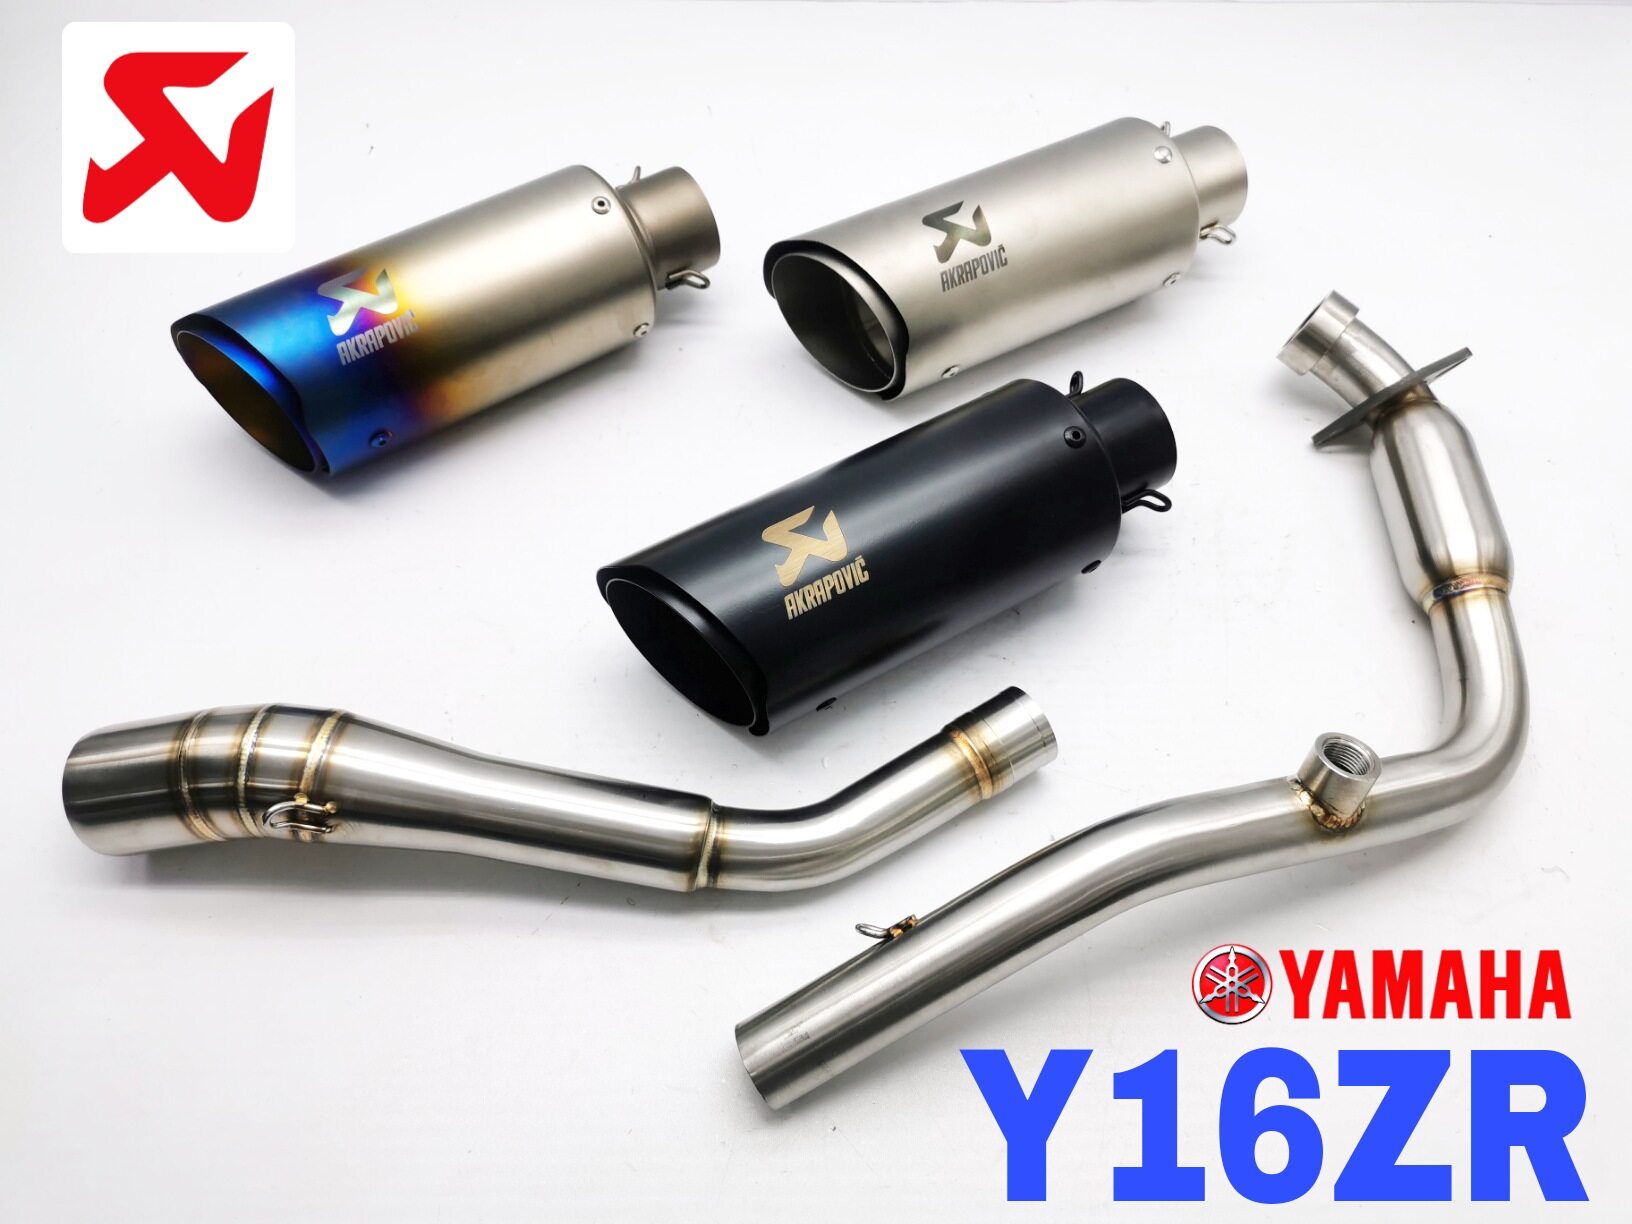 Exhaust Yamaha Y16ZR Arkapovic Short Full System Y16 Tabung Muffler Rainbow  Ekzos AKRA Accessories Motor Pipe Manifold  Lazada